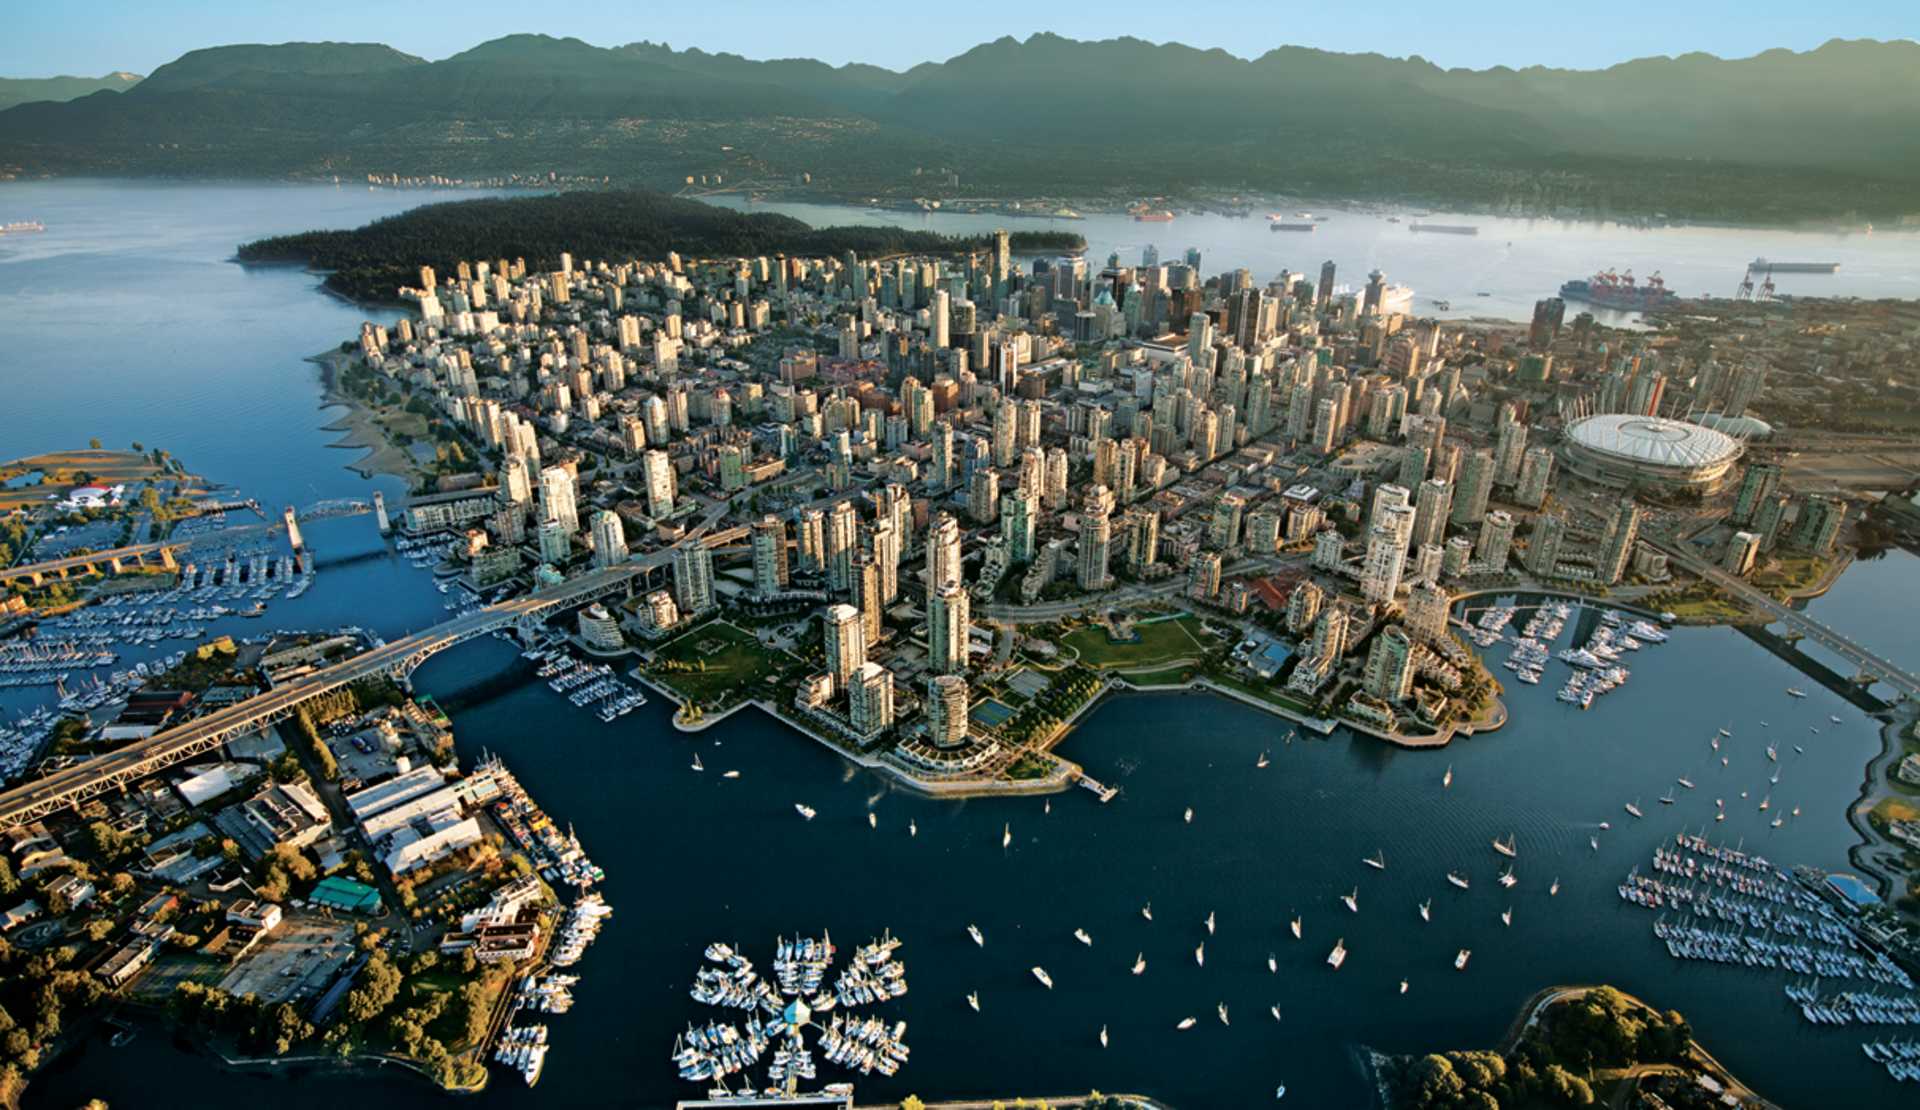 Vancouver 